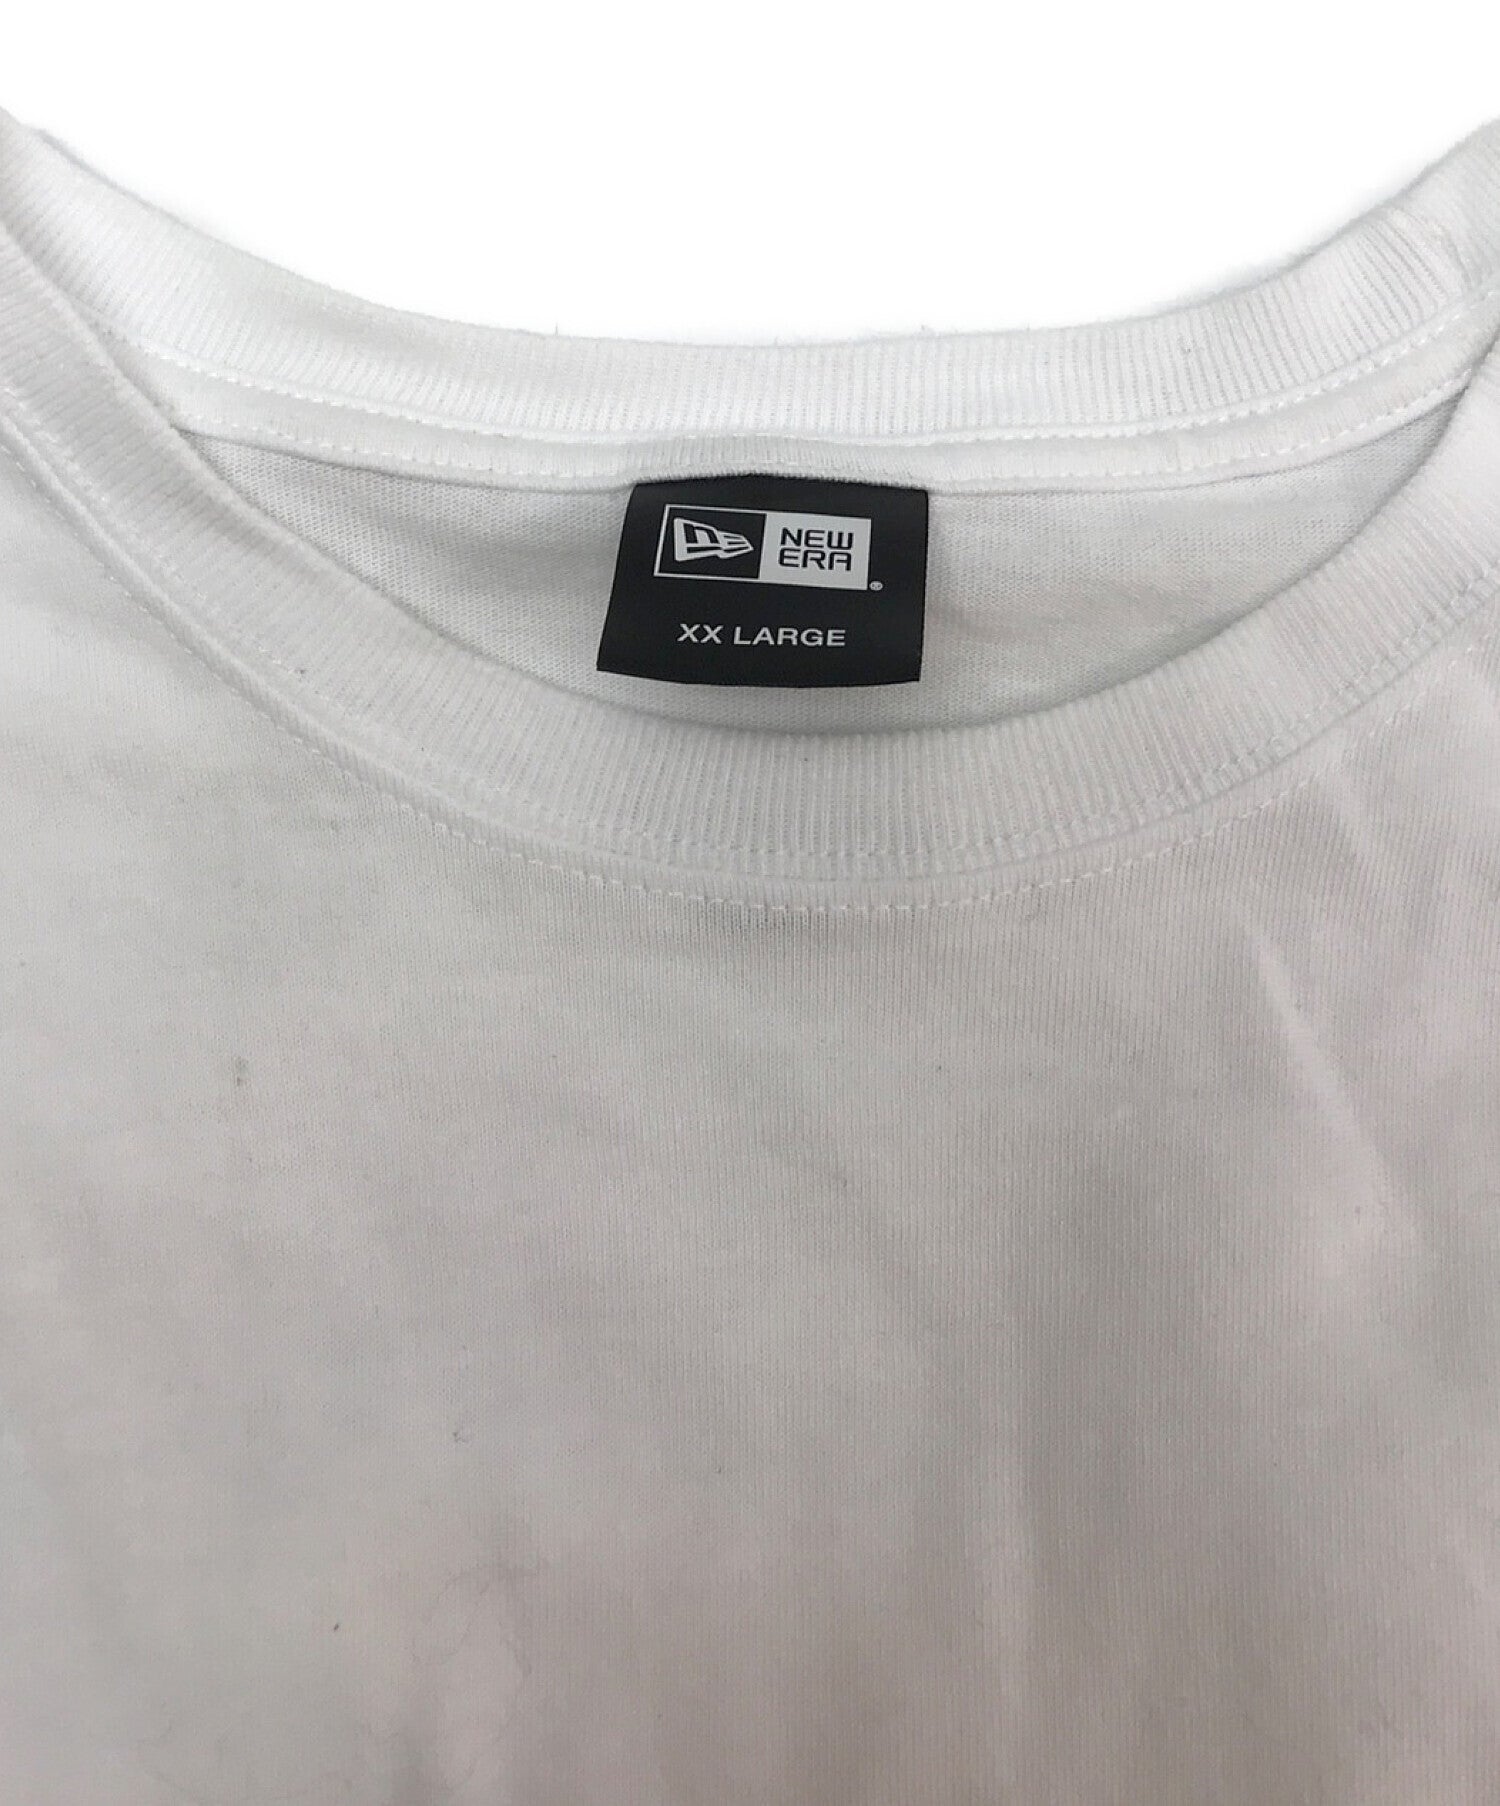 Yohji Yamamoto x New Era Collaboration T-shirts / Short Sleeve Logo  T-shirts / Short Sleeve Cut and Sewn T-shirts HC-T96-076